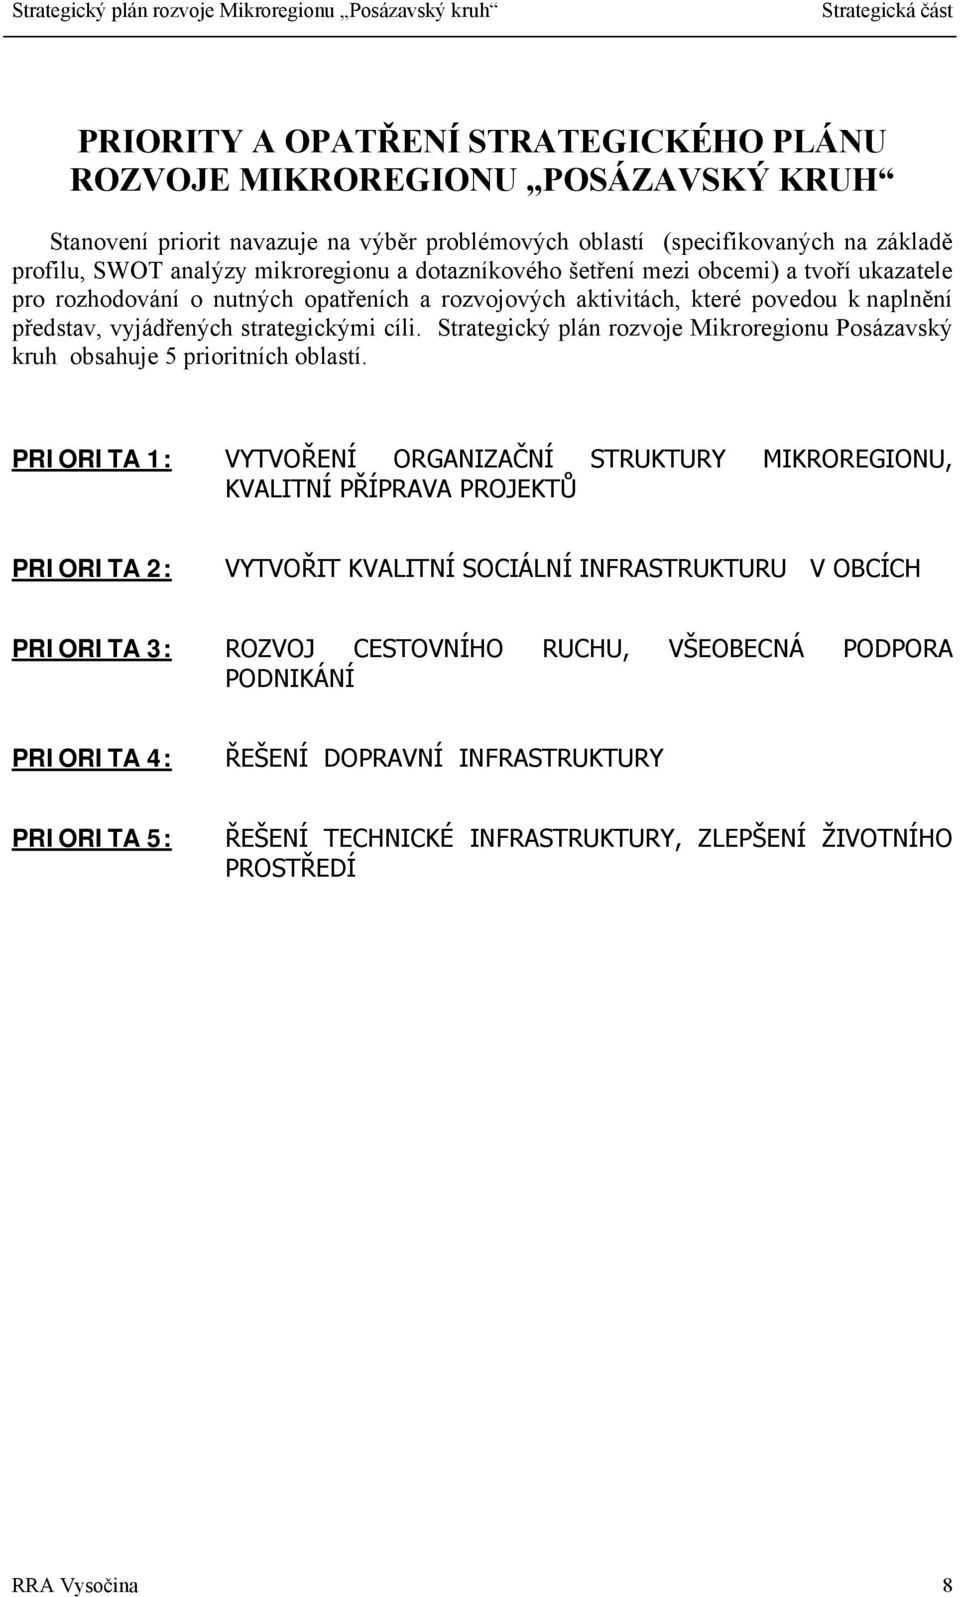 Strategický plán rozvoje Mikroregionu Posázavský kruh obsahuje 5 prioritních oblastí.